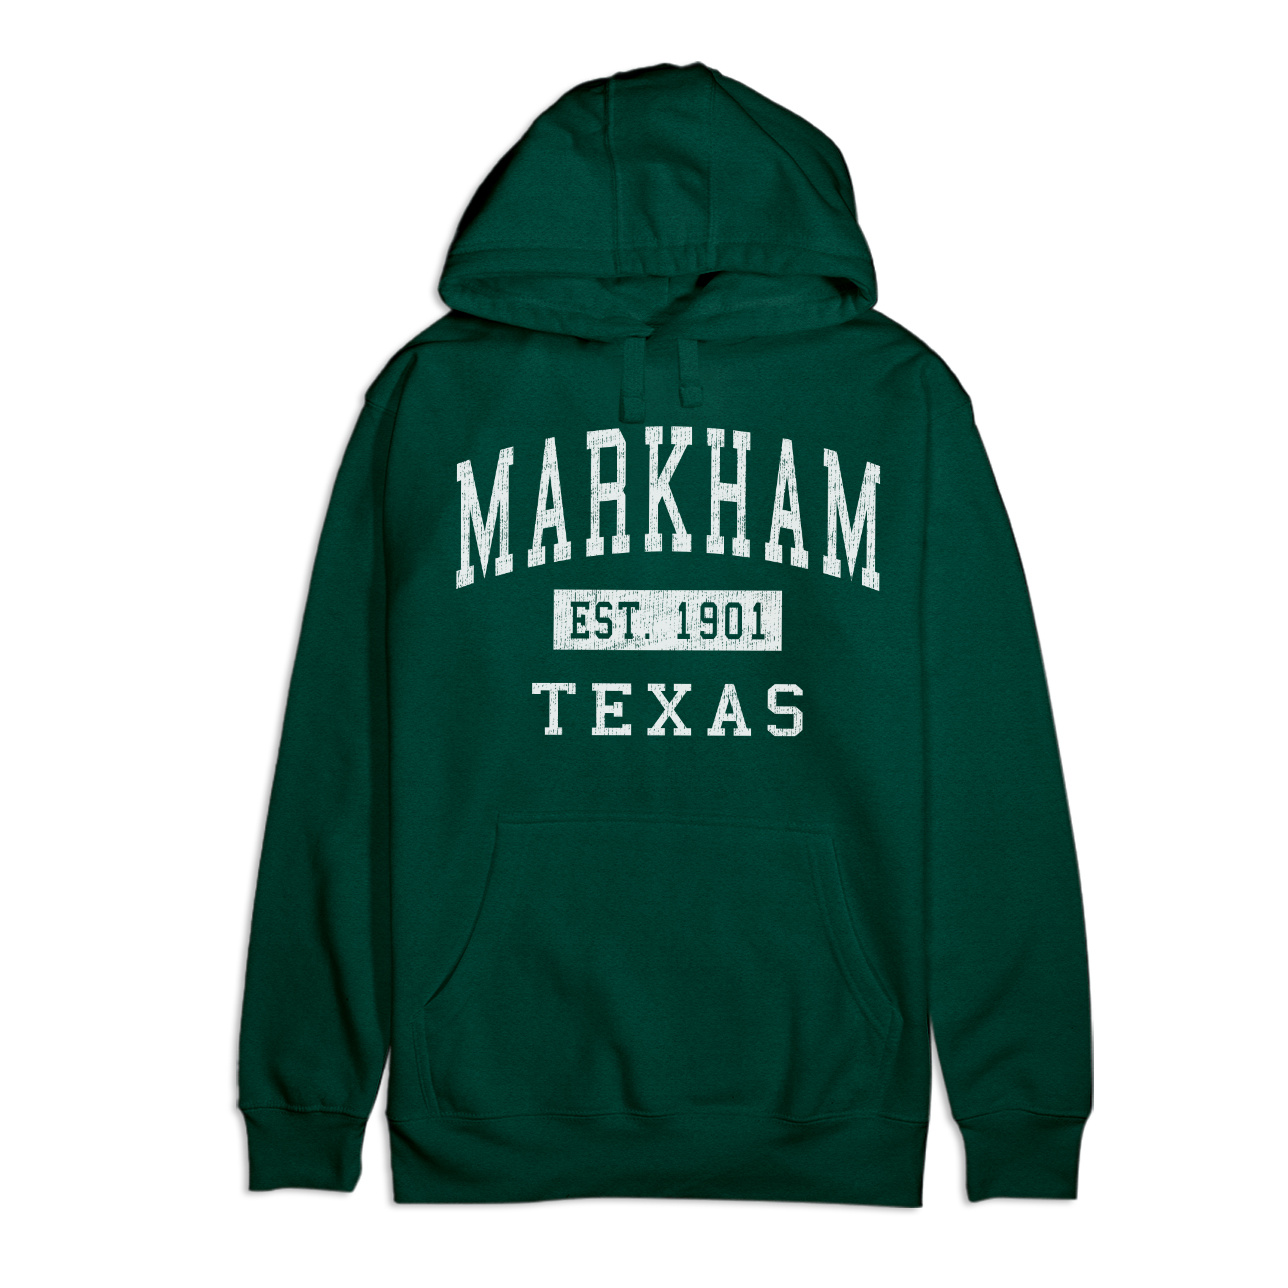 Markham Texas Classic Established Premium Cotton Hoodie - image 1 of 1